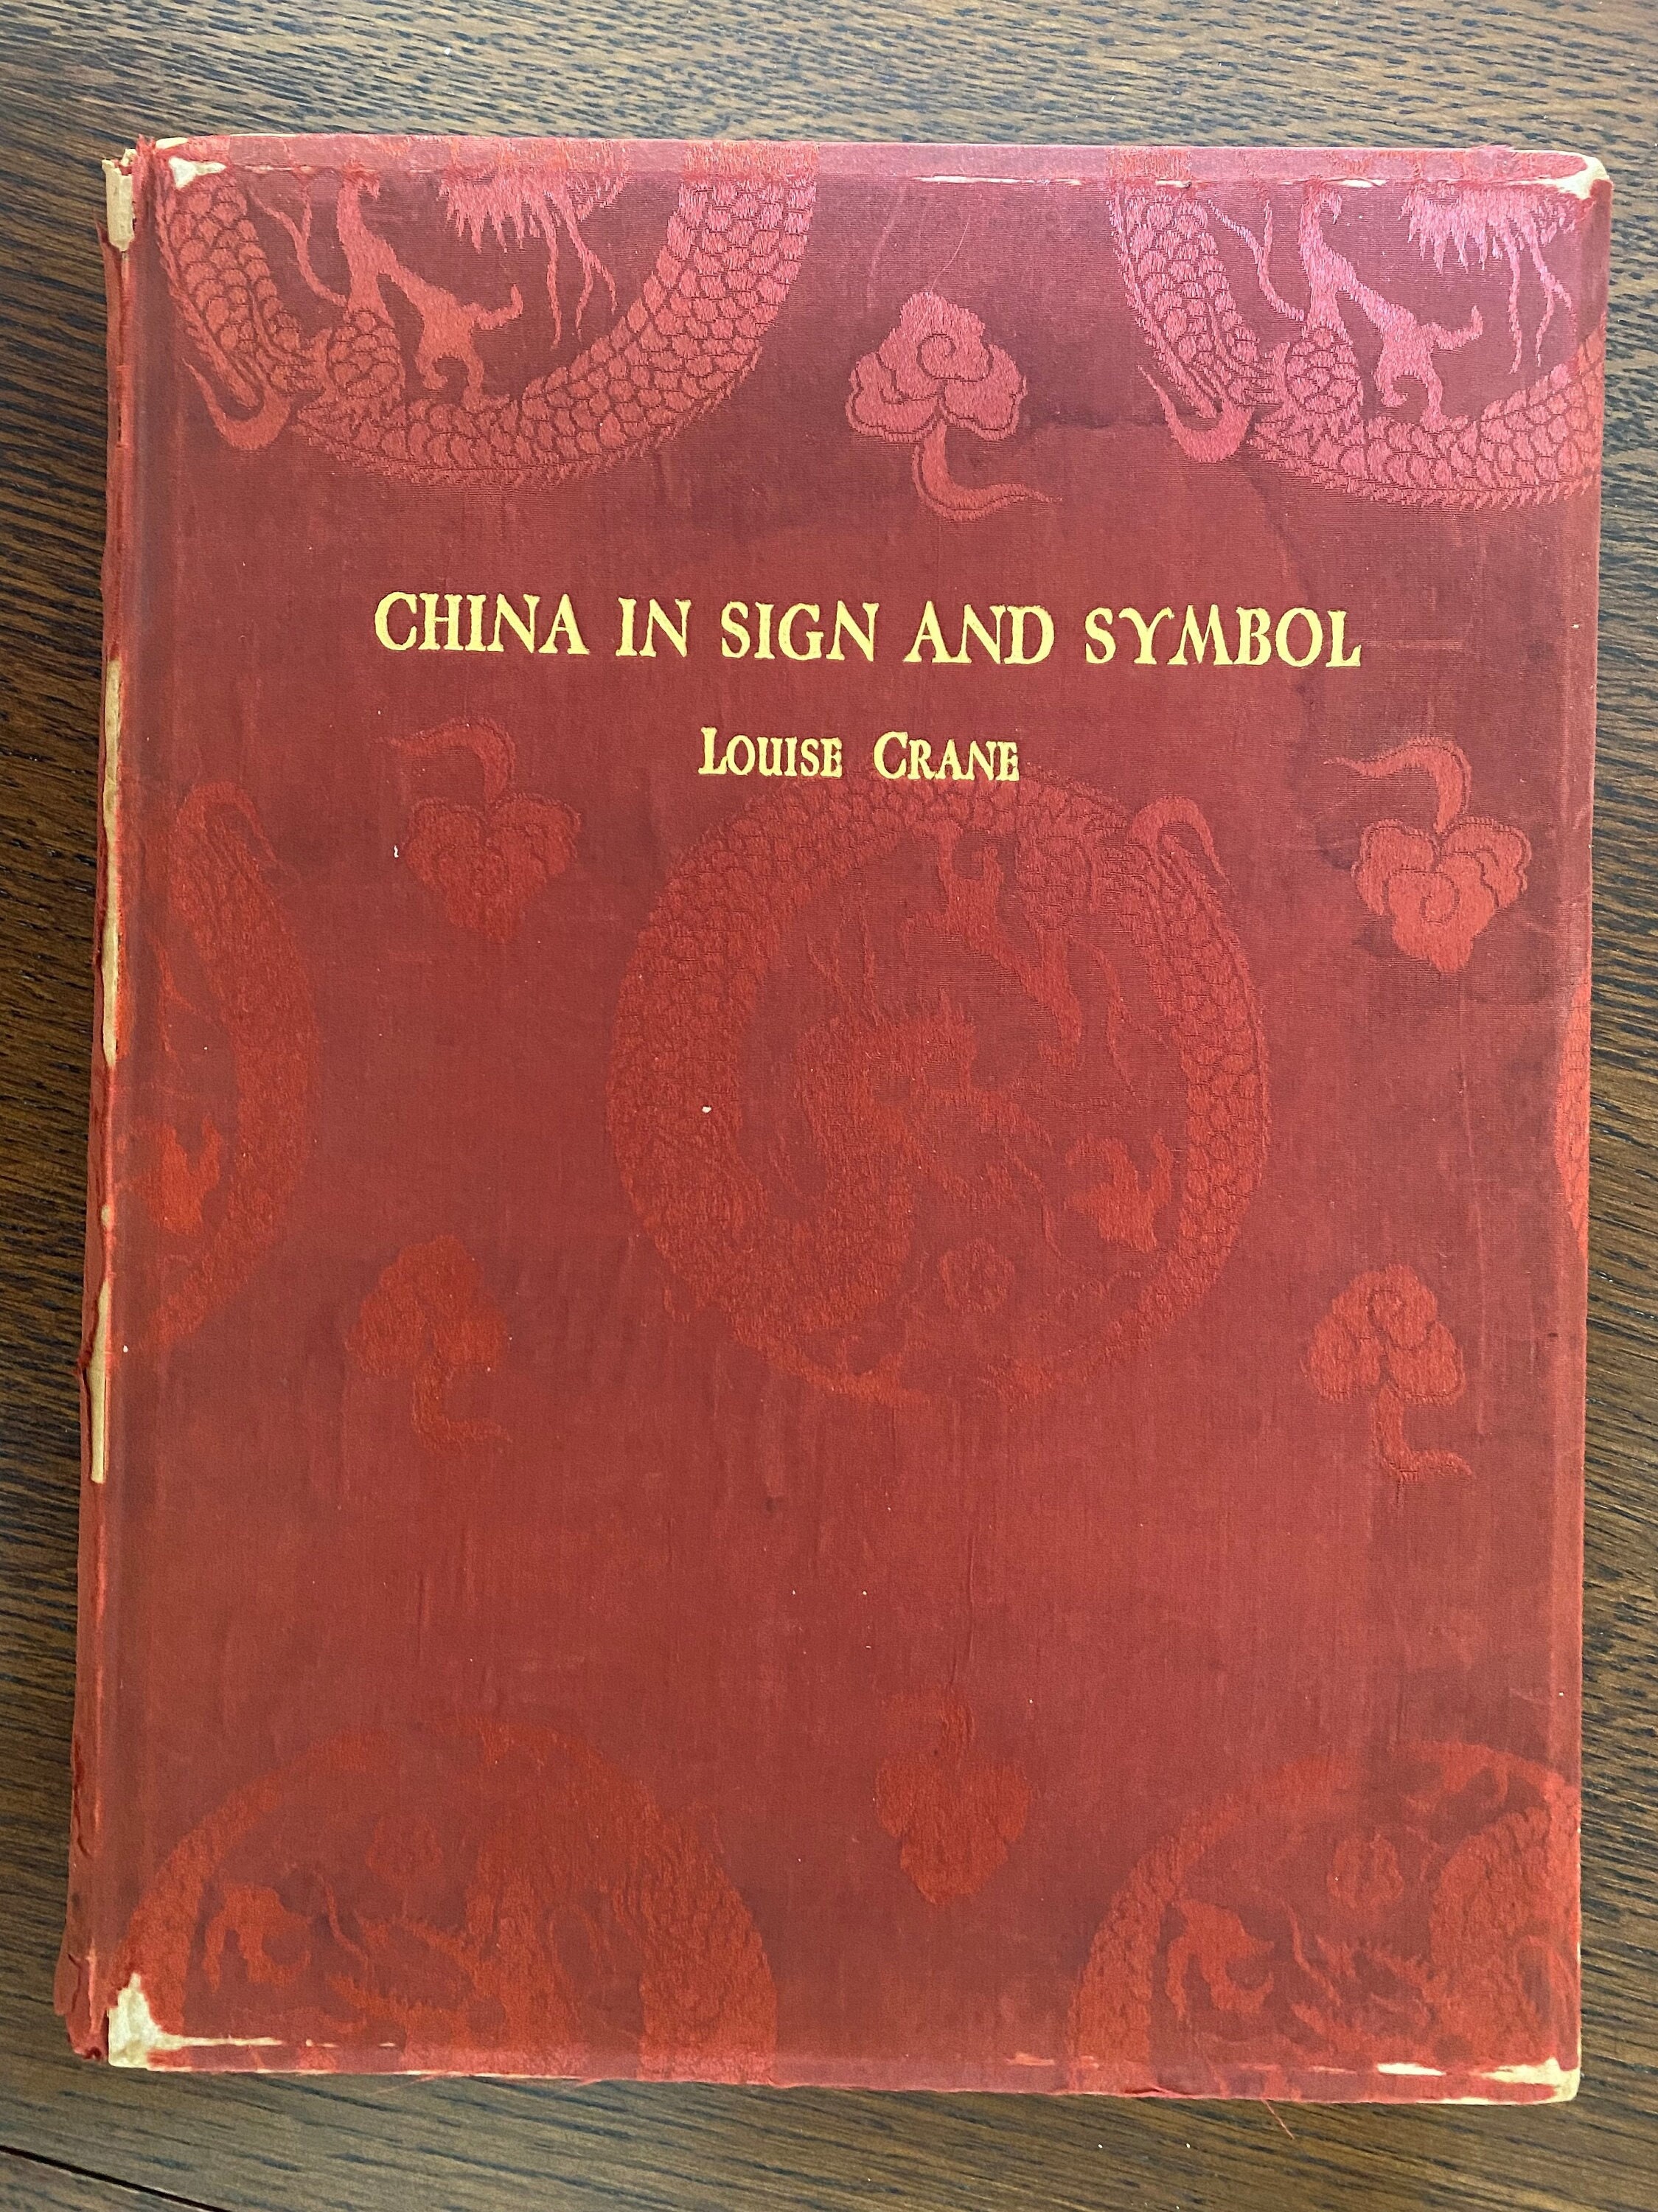 China in Sign and Symbol, KENT CRANE, Louise Crane